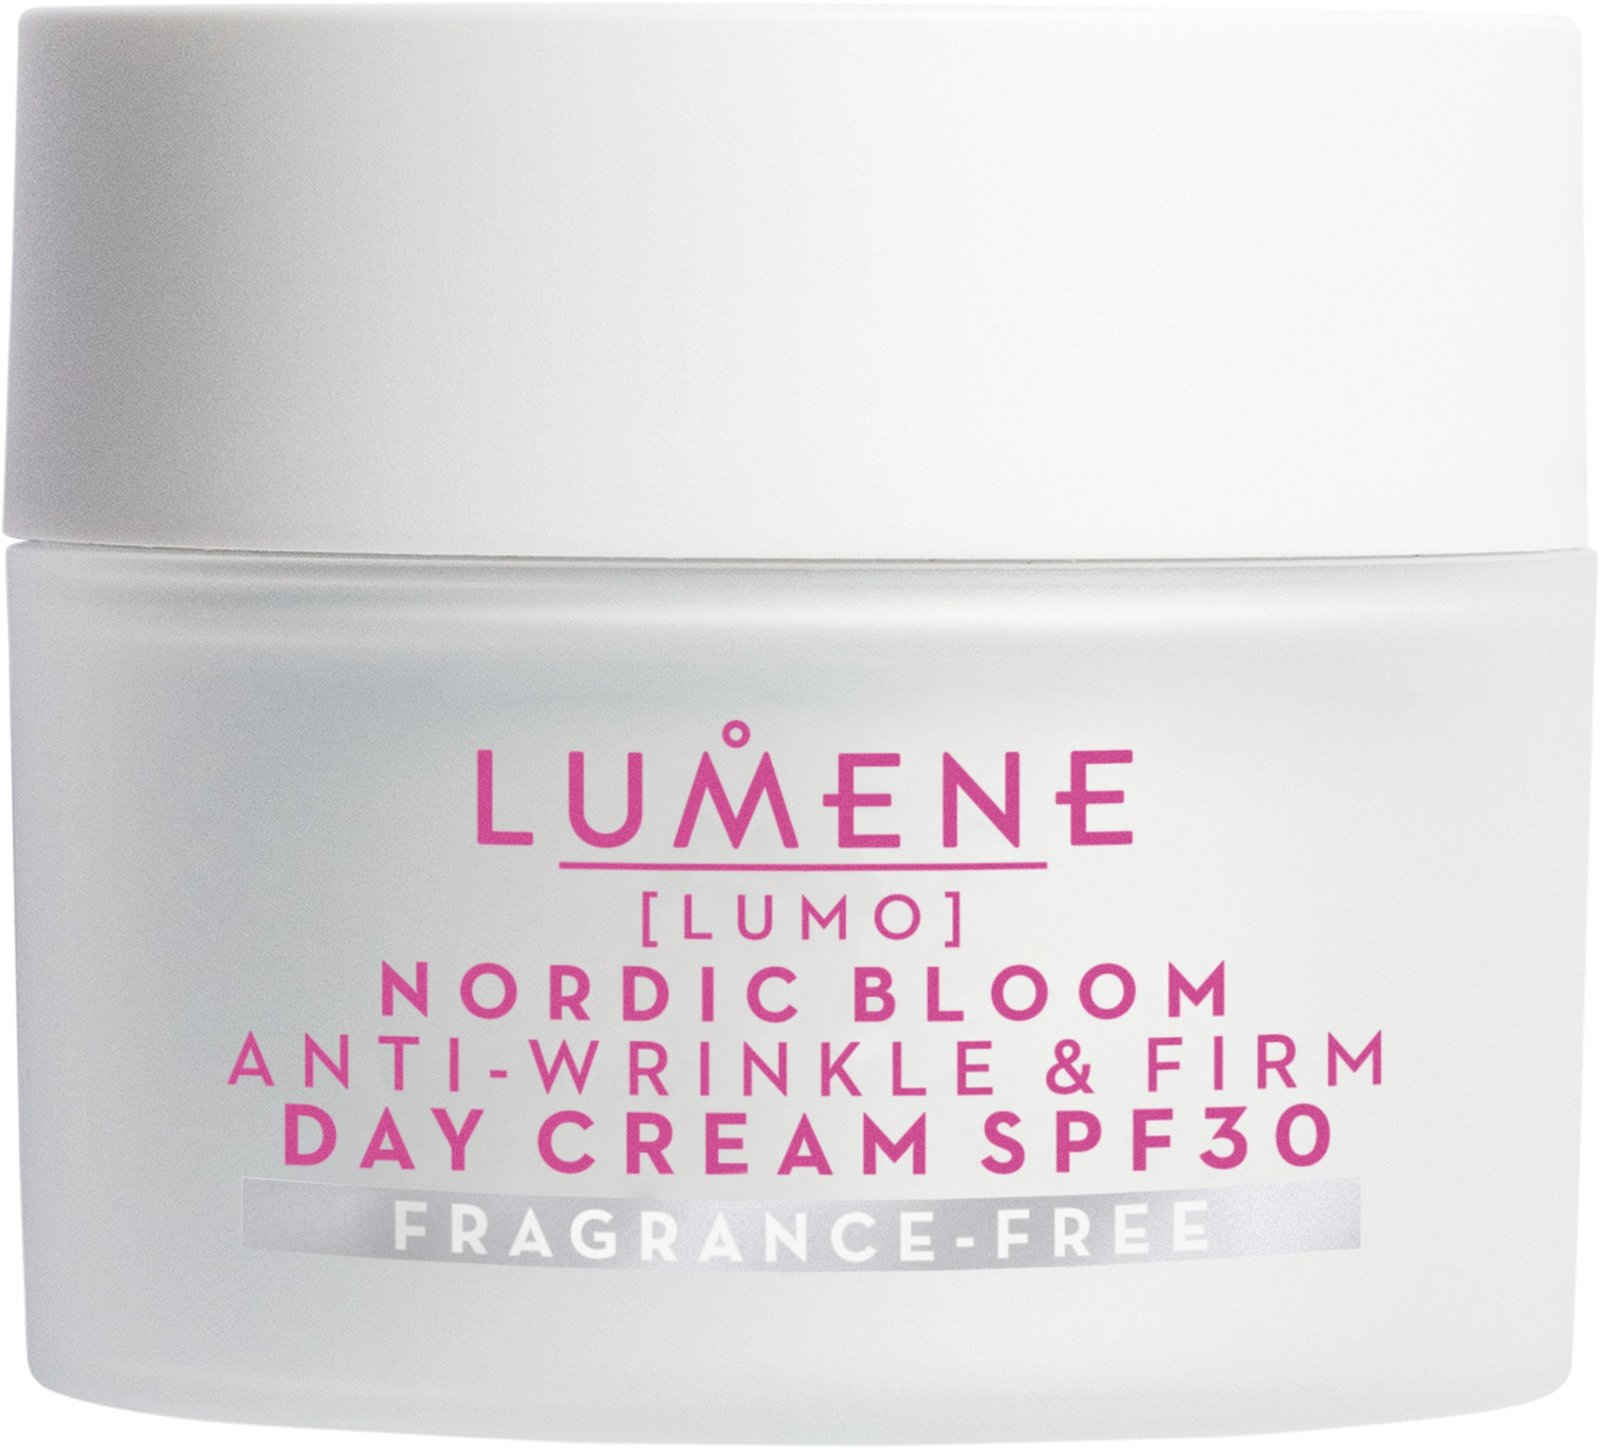 Lumene Nordic Bloom Anti-wrinkle & Firm Day Cream SPF30 Fragrance-free 50 ml